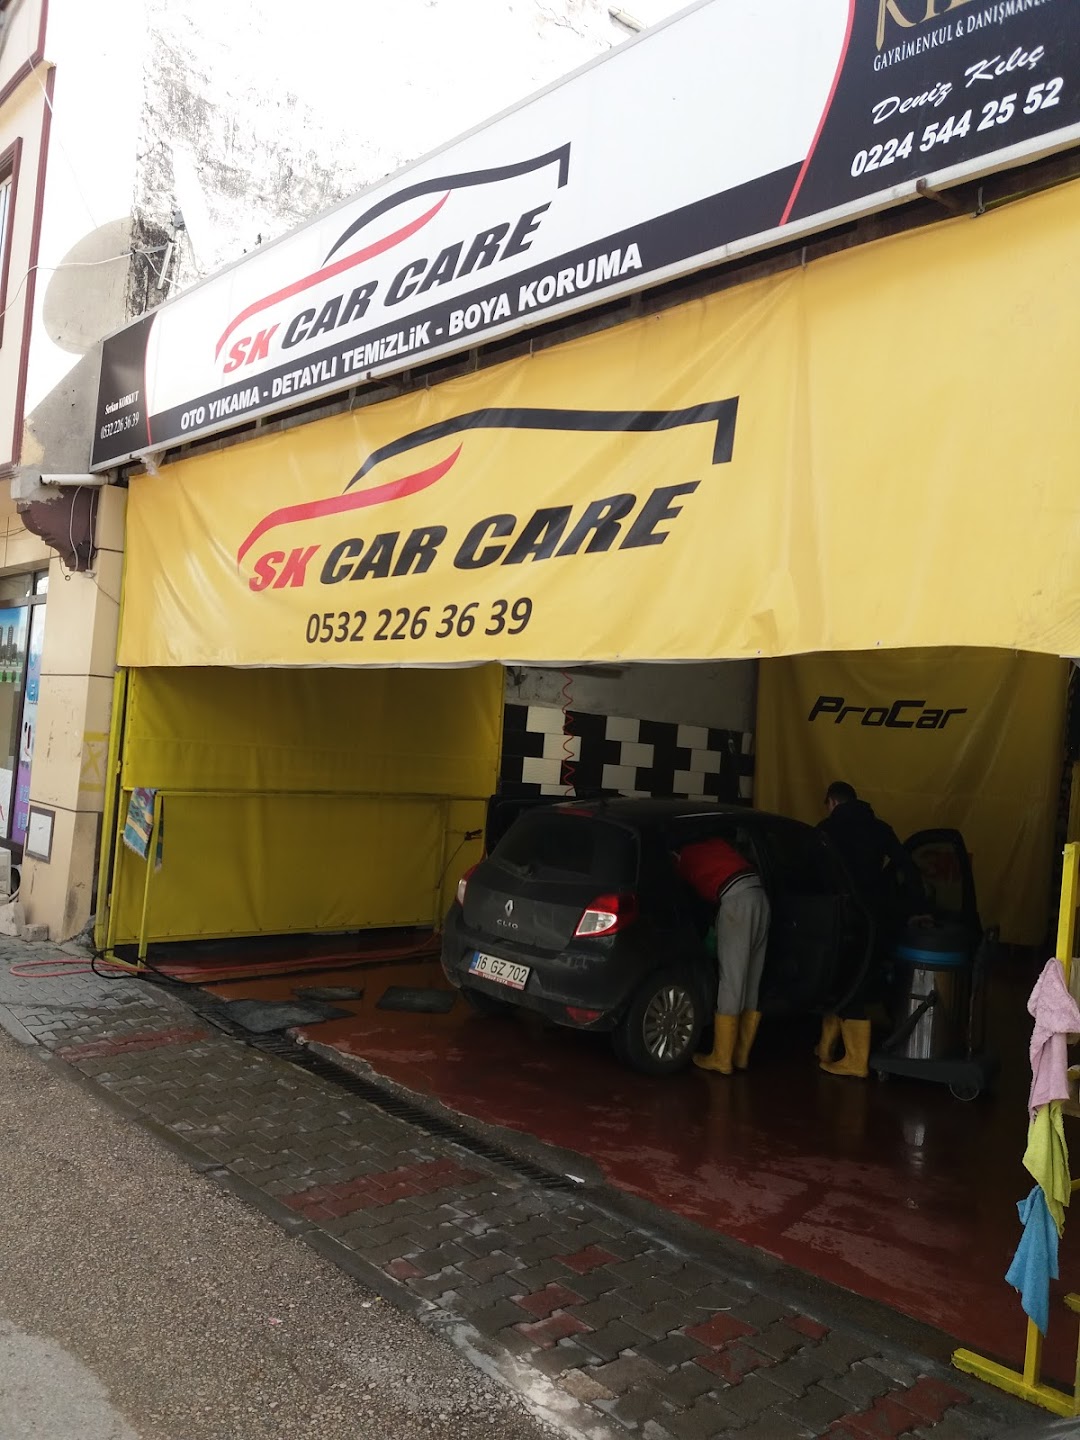 SK Car Care